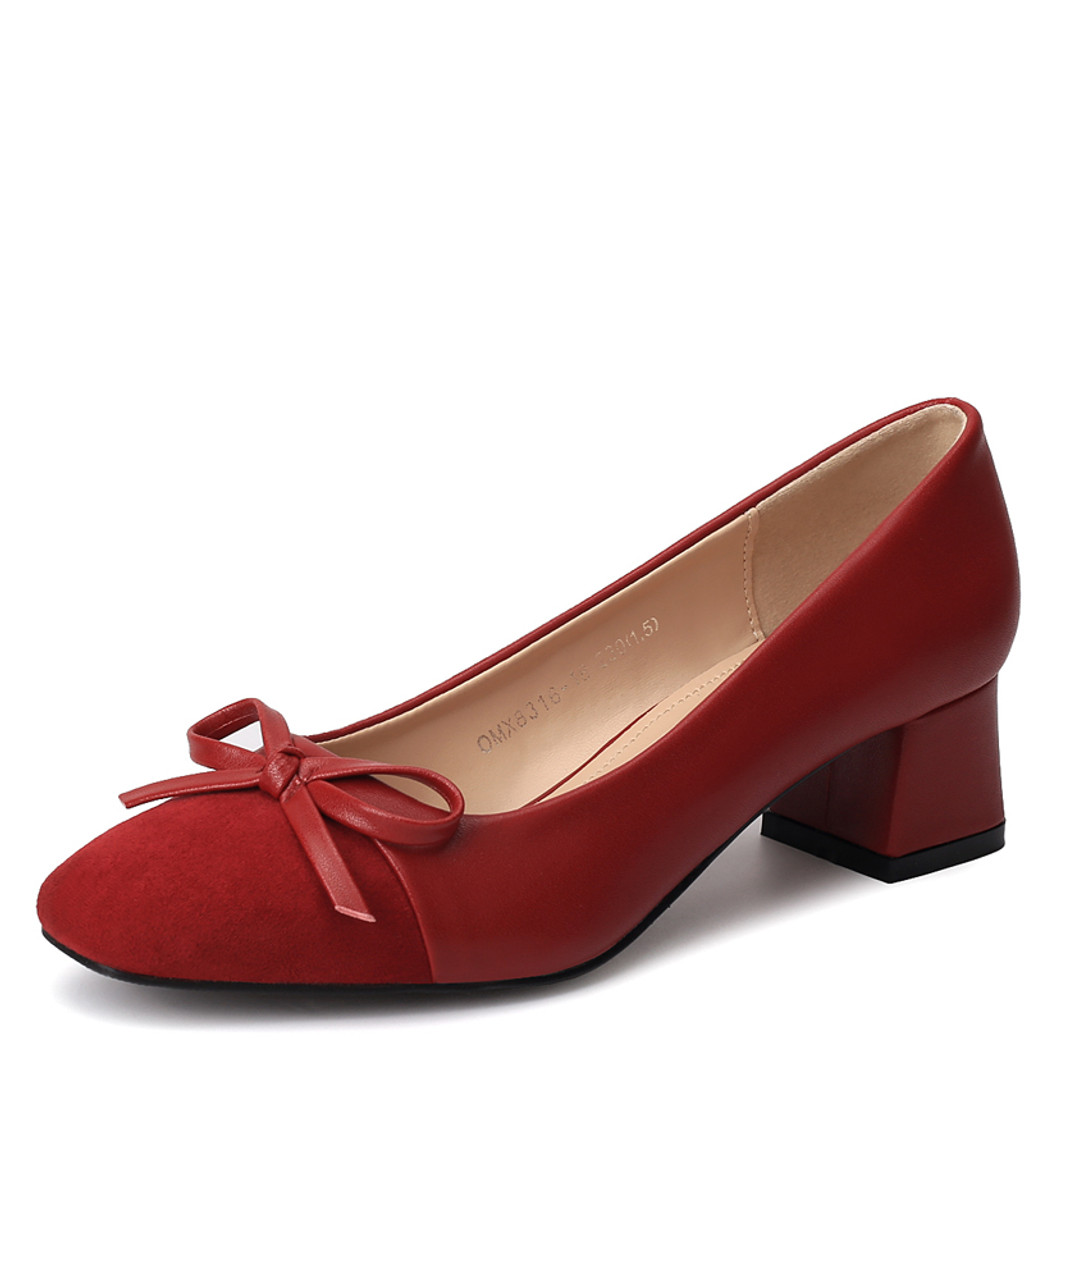 Red bow tie n vamp slip on thick heel dress shoe | Womens heel dress ...